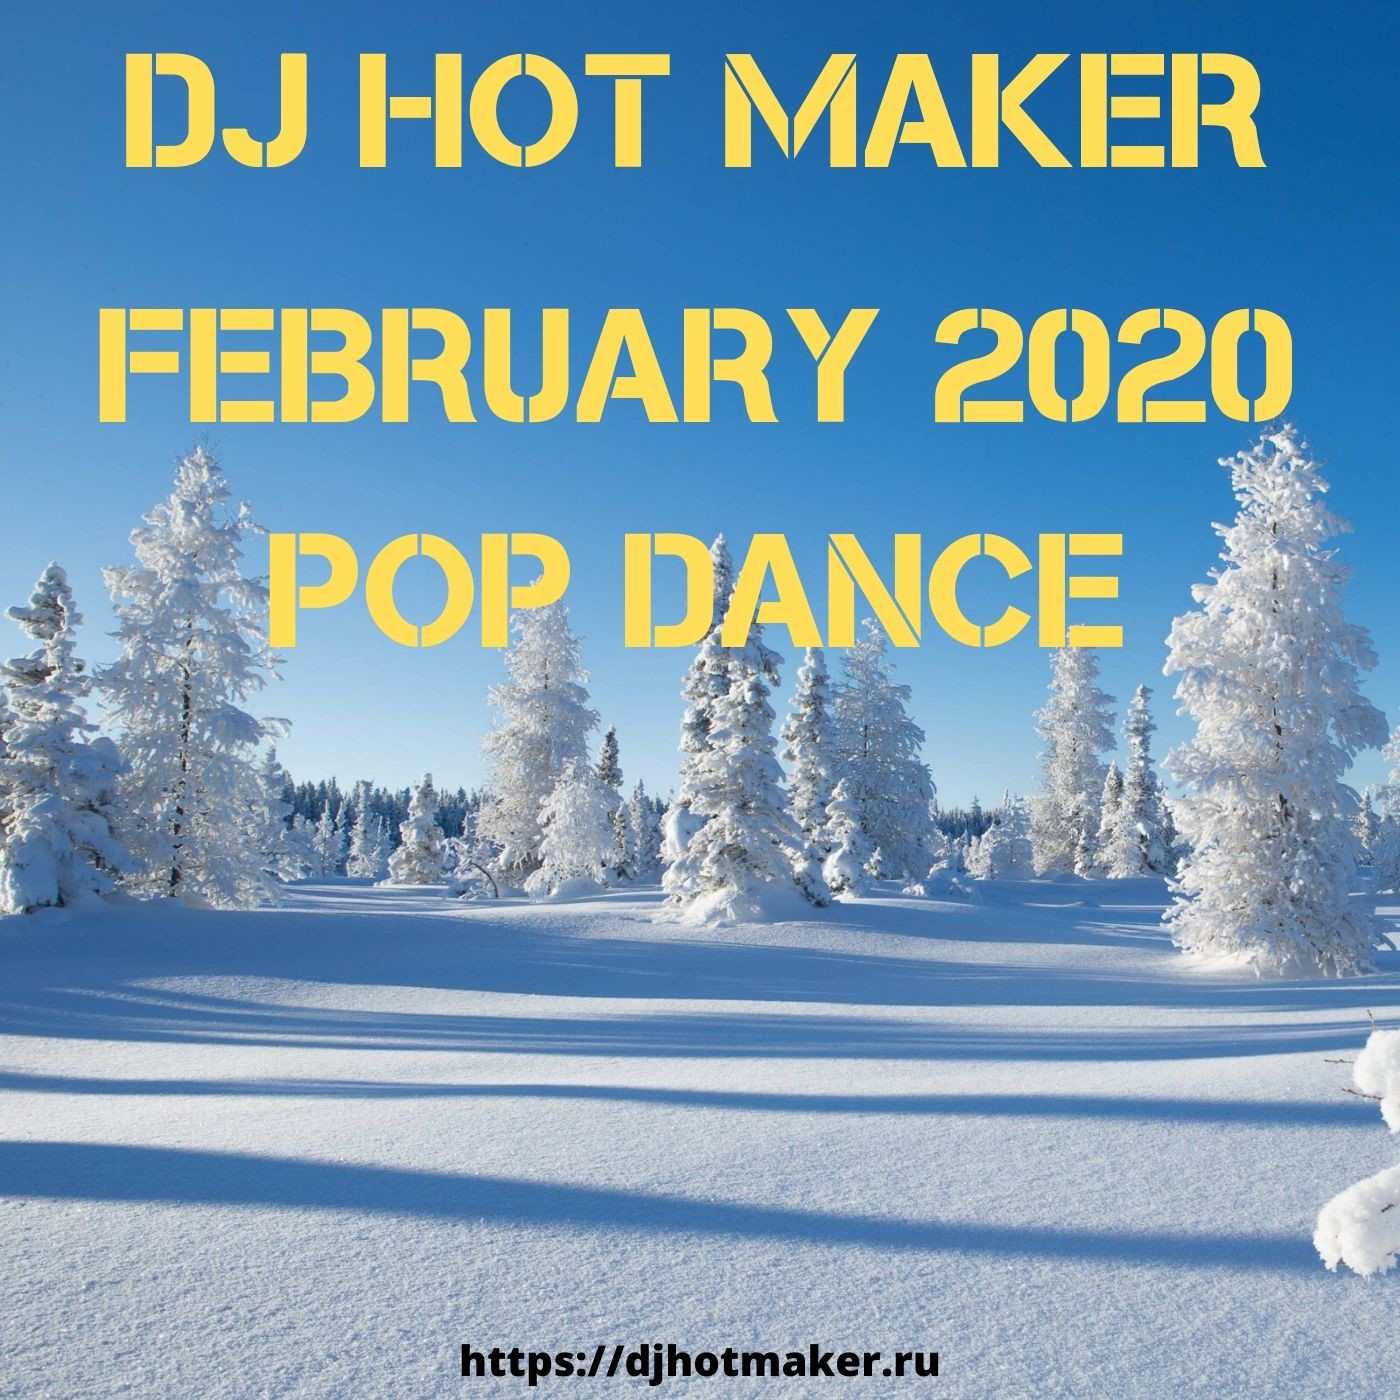 DJ Hot Maker - February 2020 Pop Dance Promo